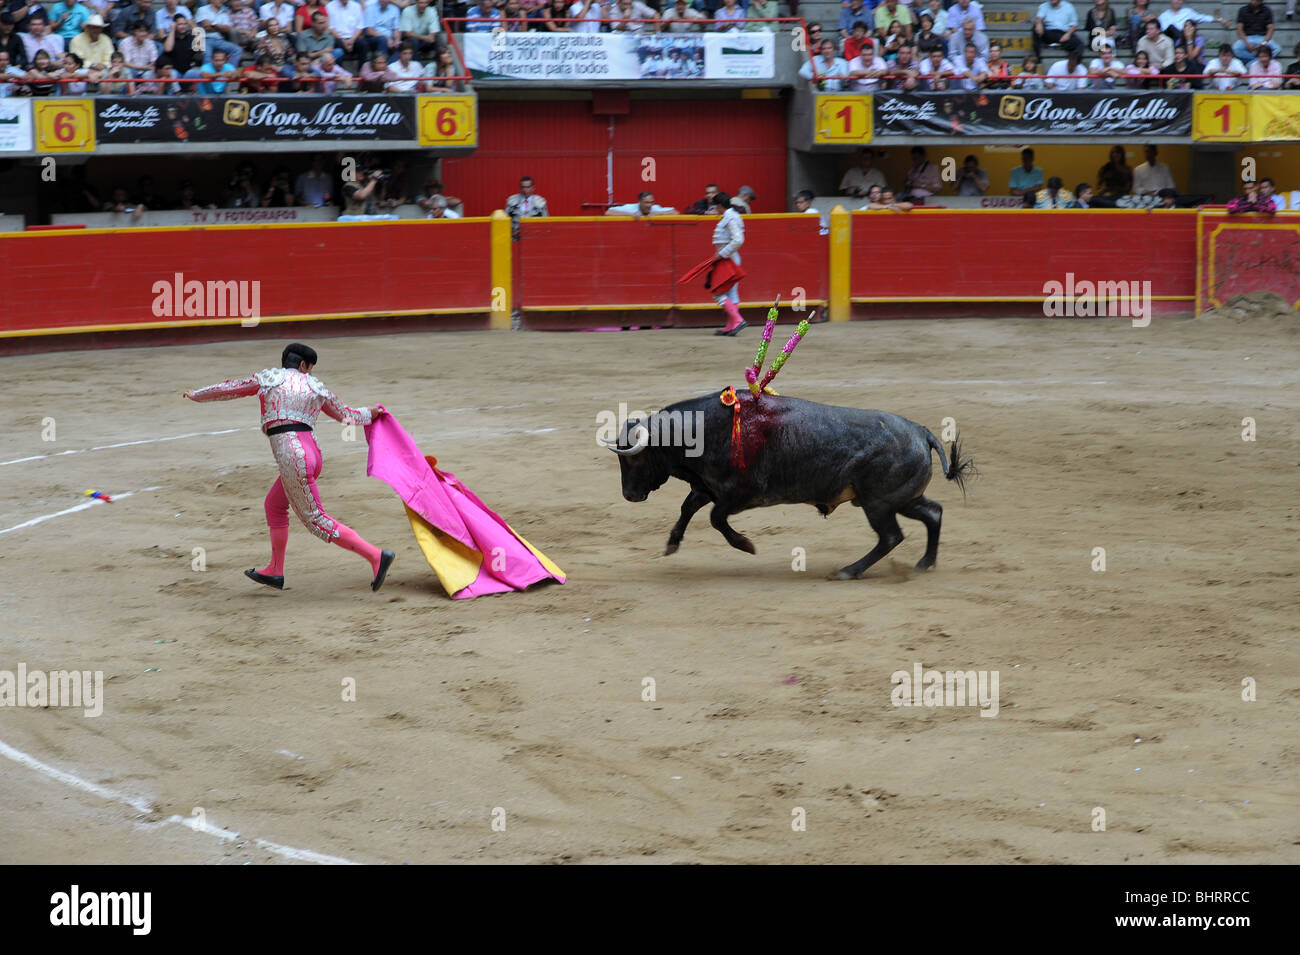 Matador bull charging hi-res stock photography and images - Alamy